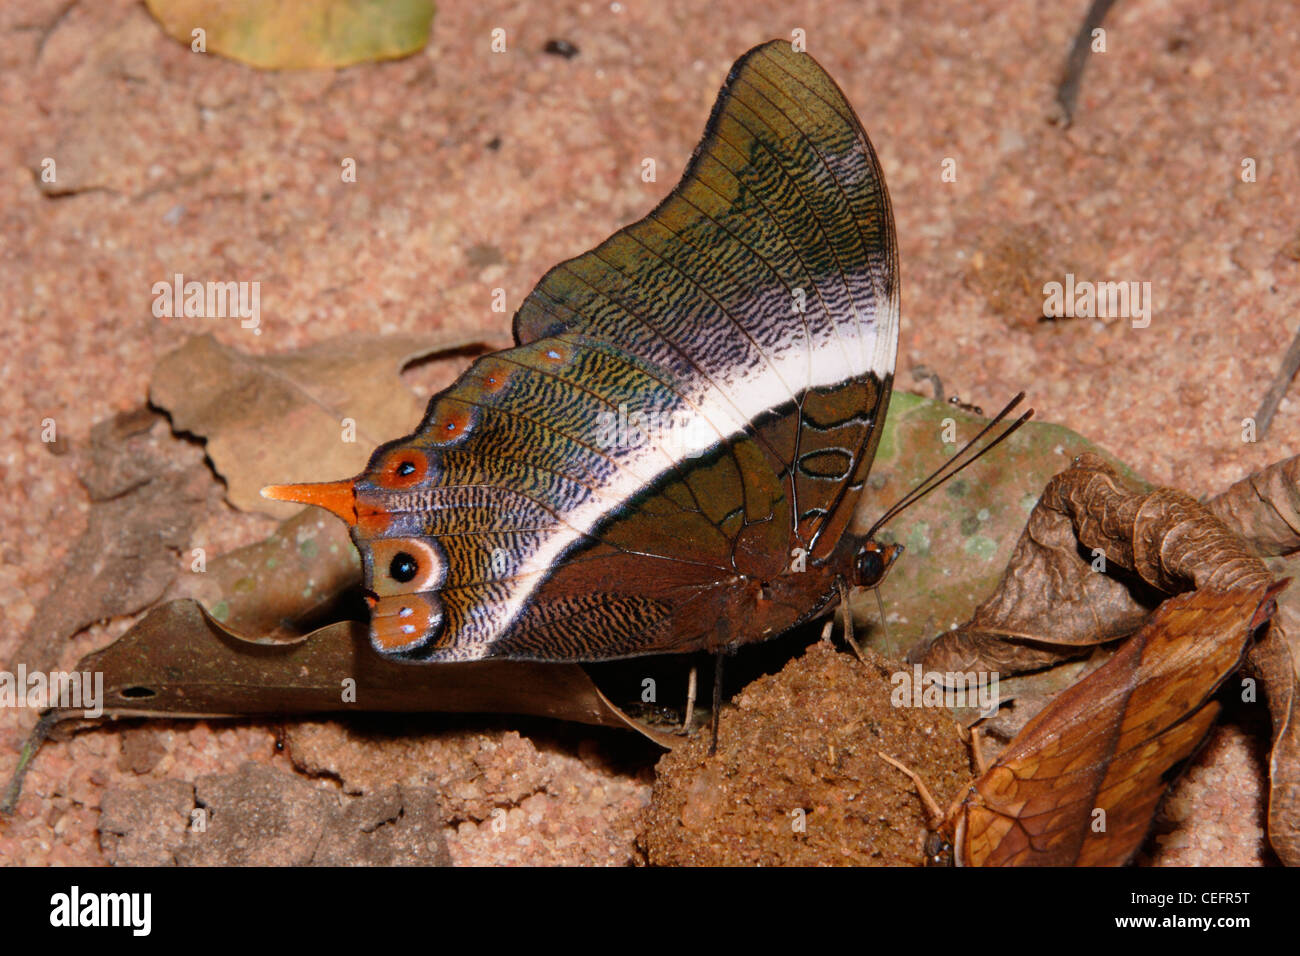 Butterfly (Palla ussheri: Nymphalidae) alimentándose de algalia estiércol en la selva tropical, de Ghana. Foto de stock